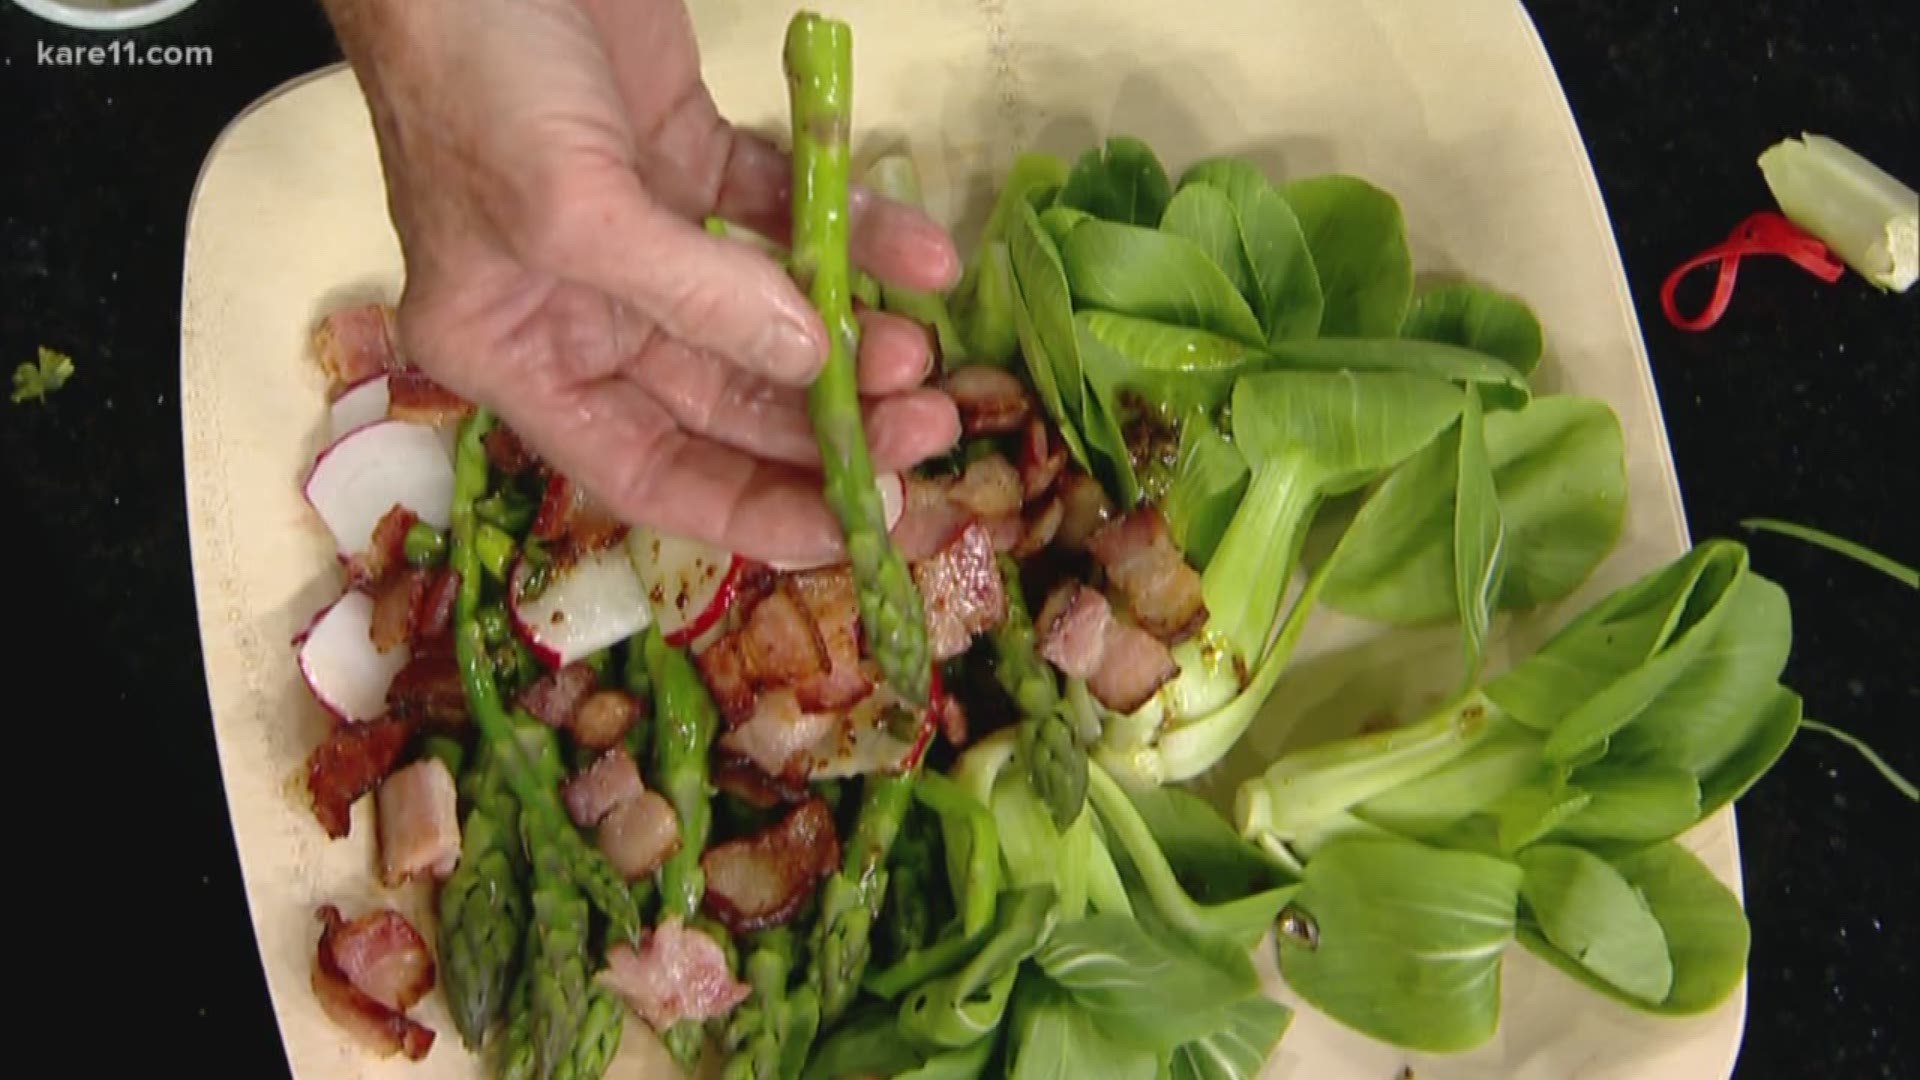 James Beard award winning cookbook author Beth Dooley serves us her take on a seasonal favorite: Asparagus & radish salad in bacon vinaigrette.